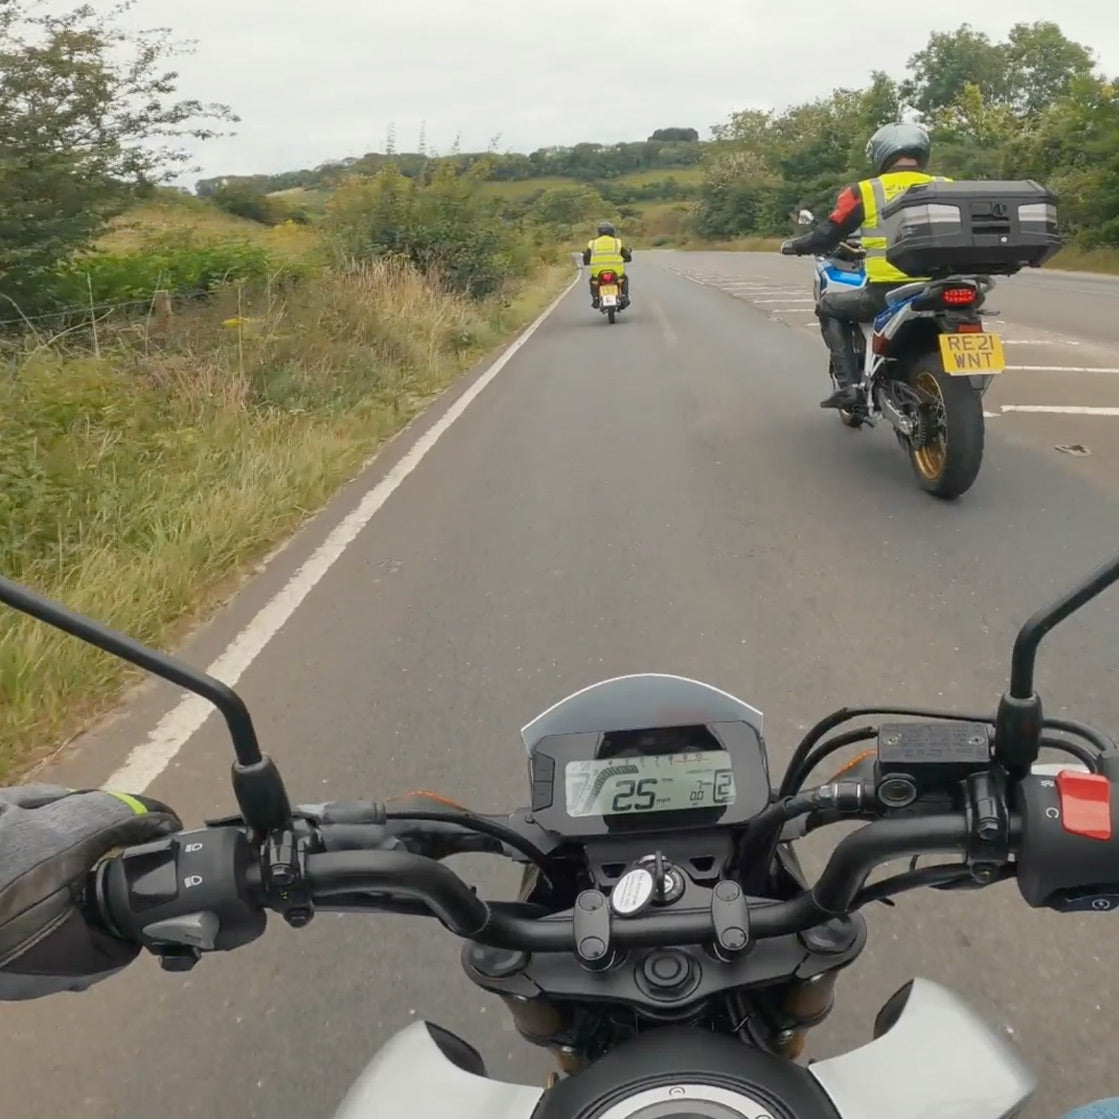 Honda of Bournemouth Motorcycle Training Courses, Motorcycle Training Bournemouth, Dorset Training School, CBT and Full Motorbike License 